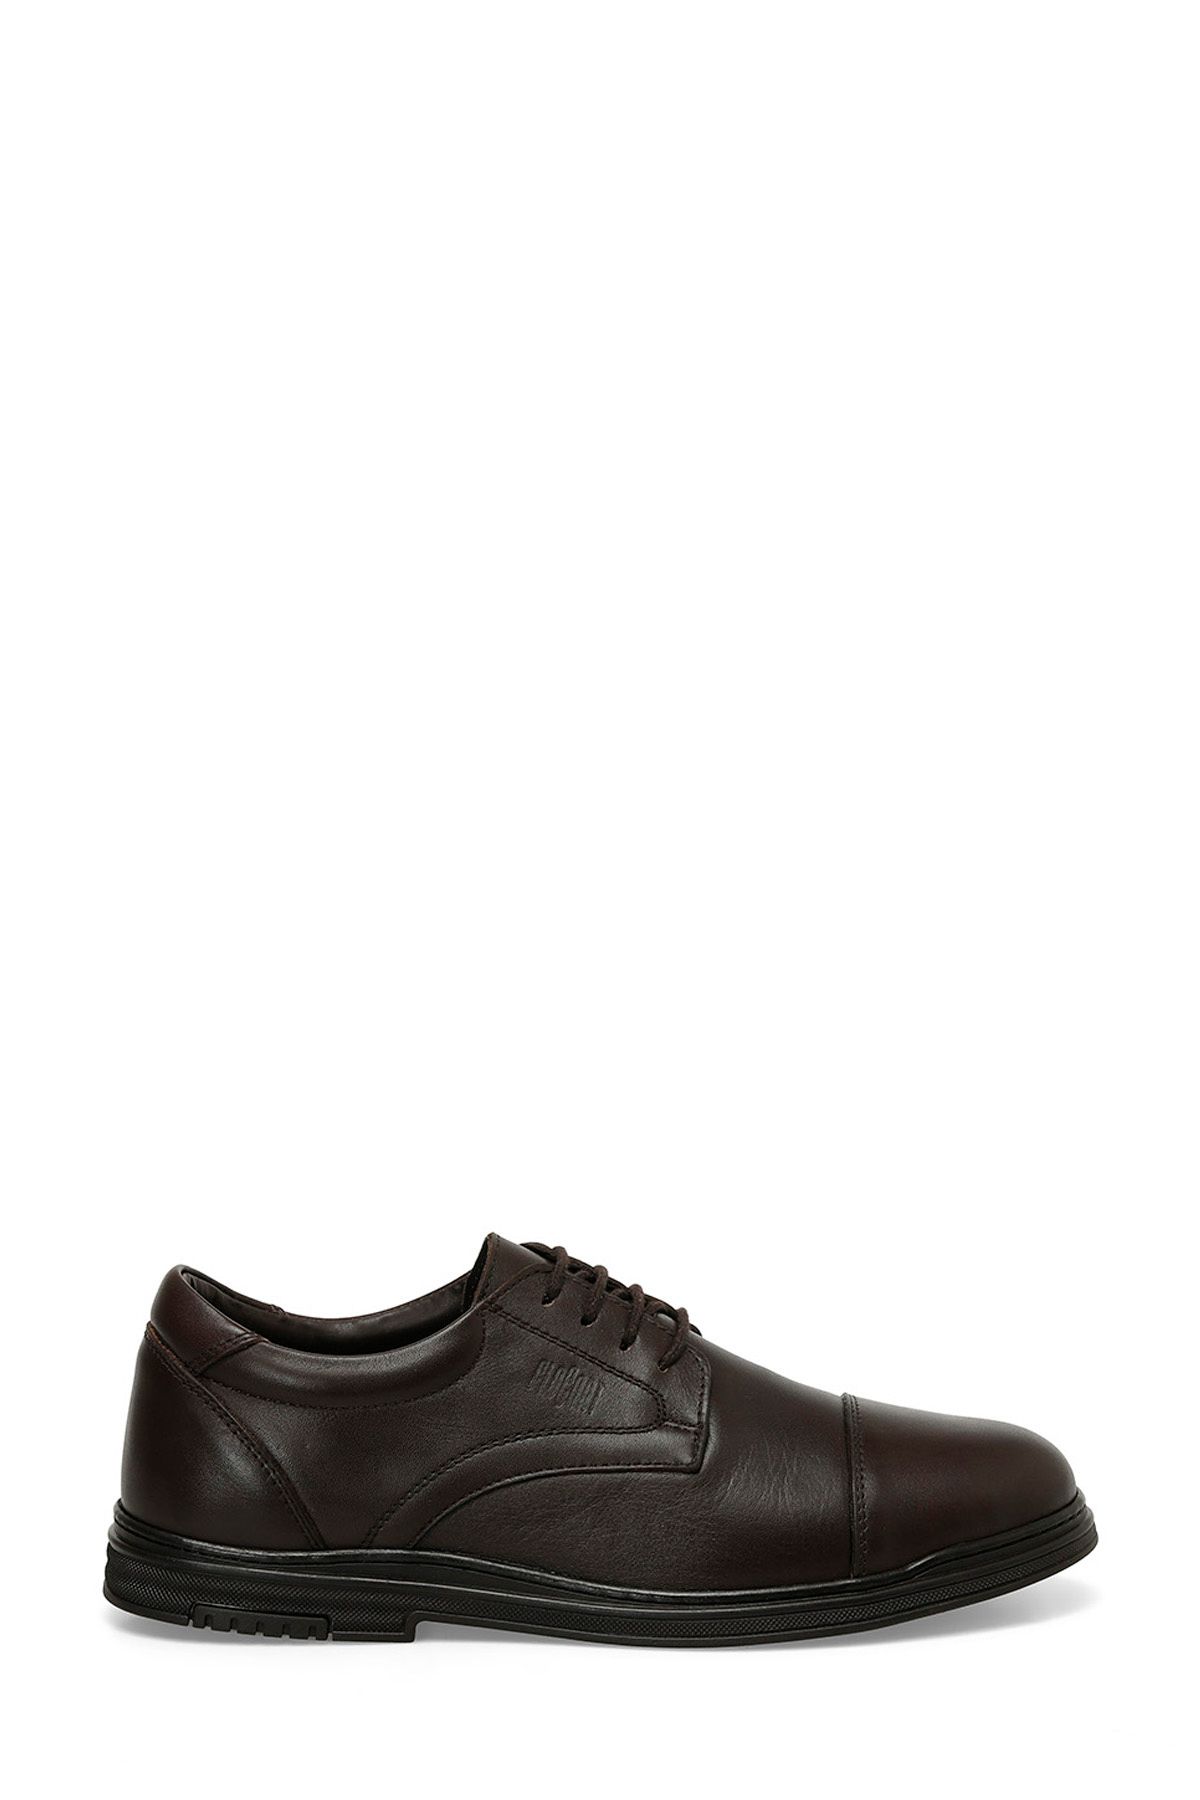 Flogart VESTER 4FX Kahverengi Erkek Ayakkabı